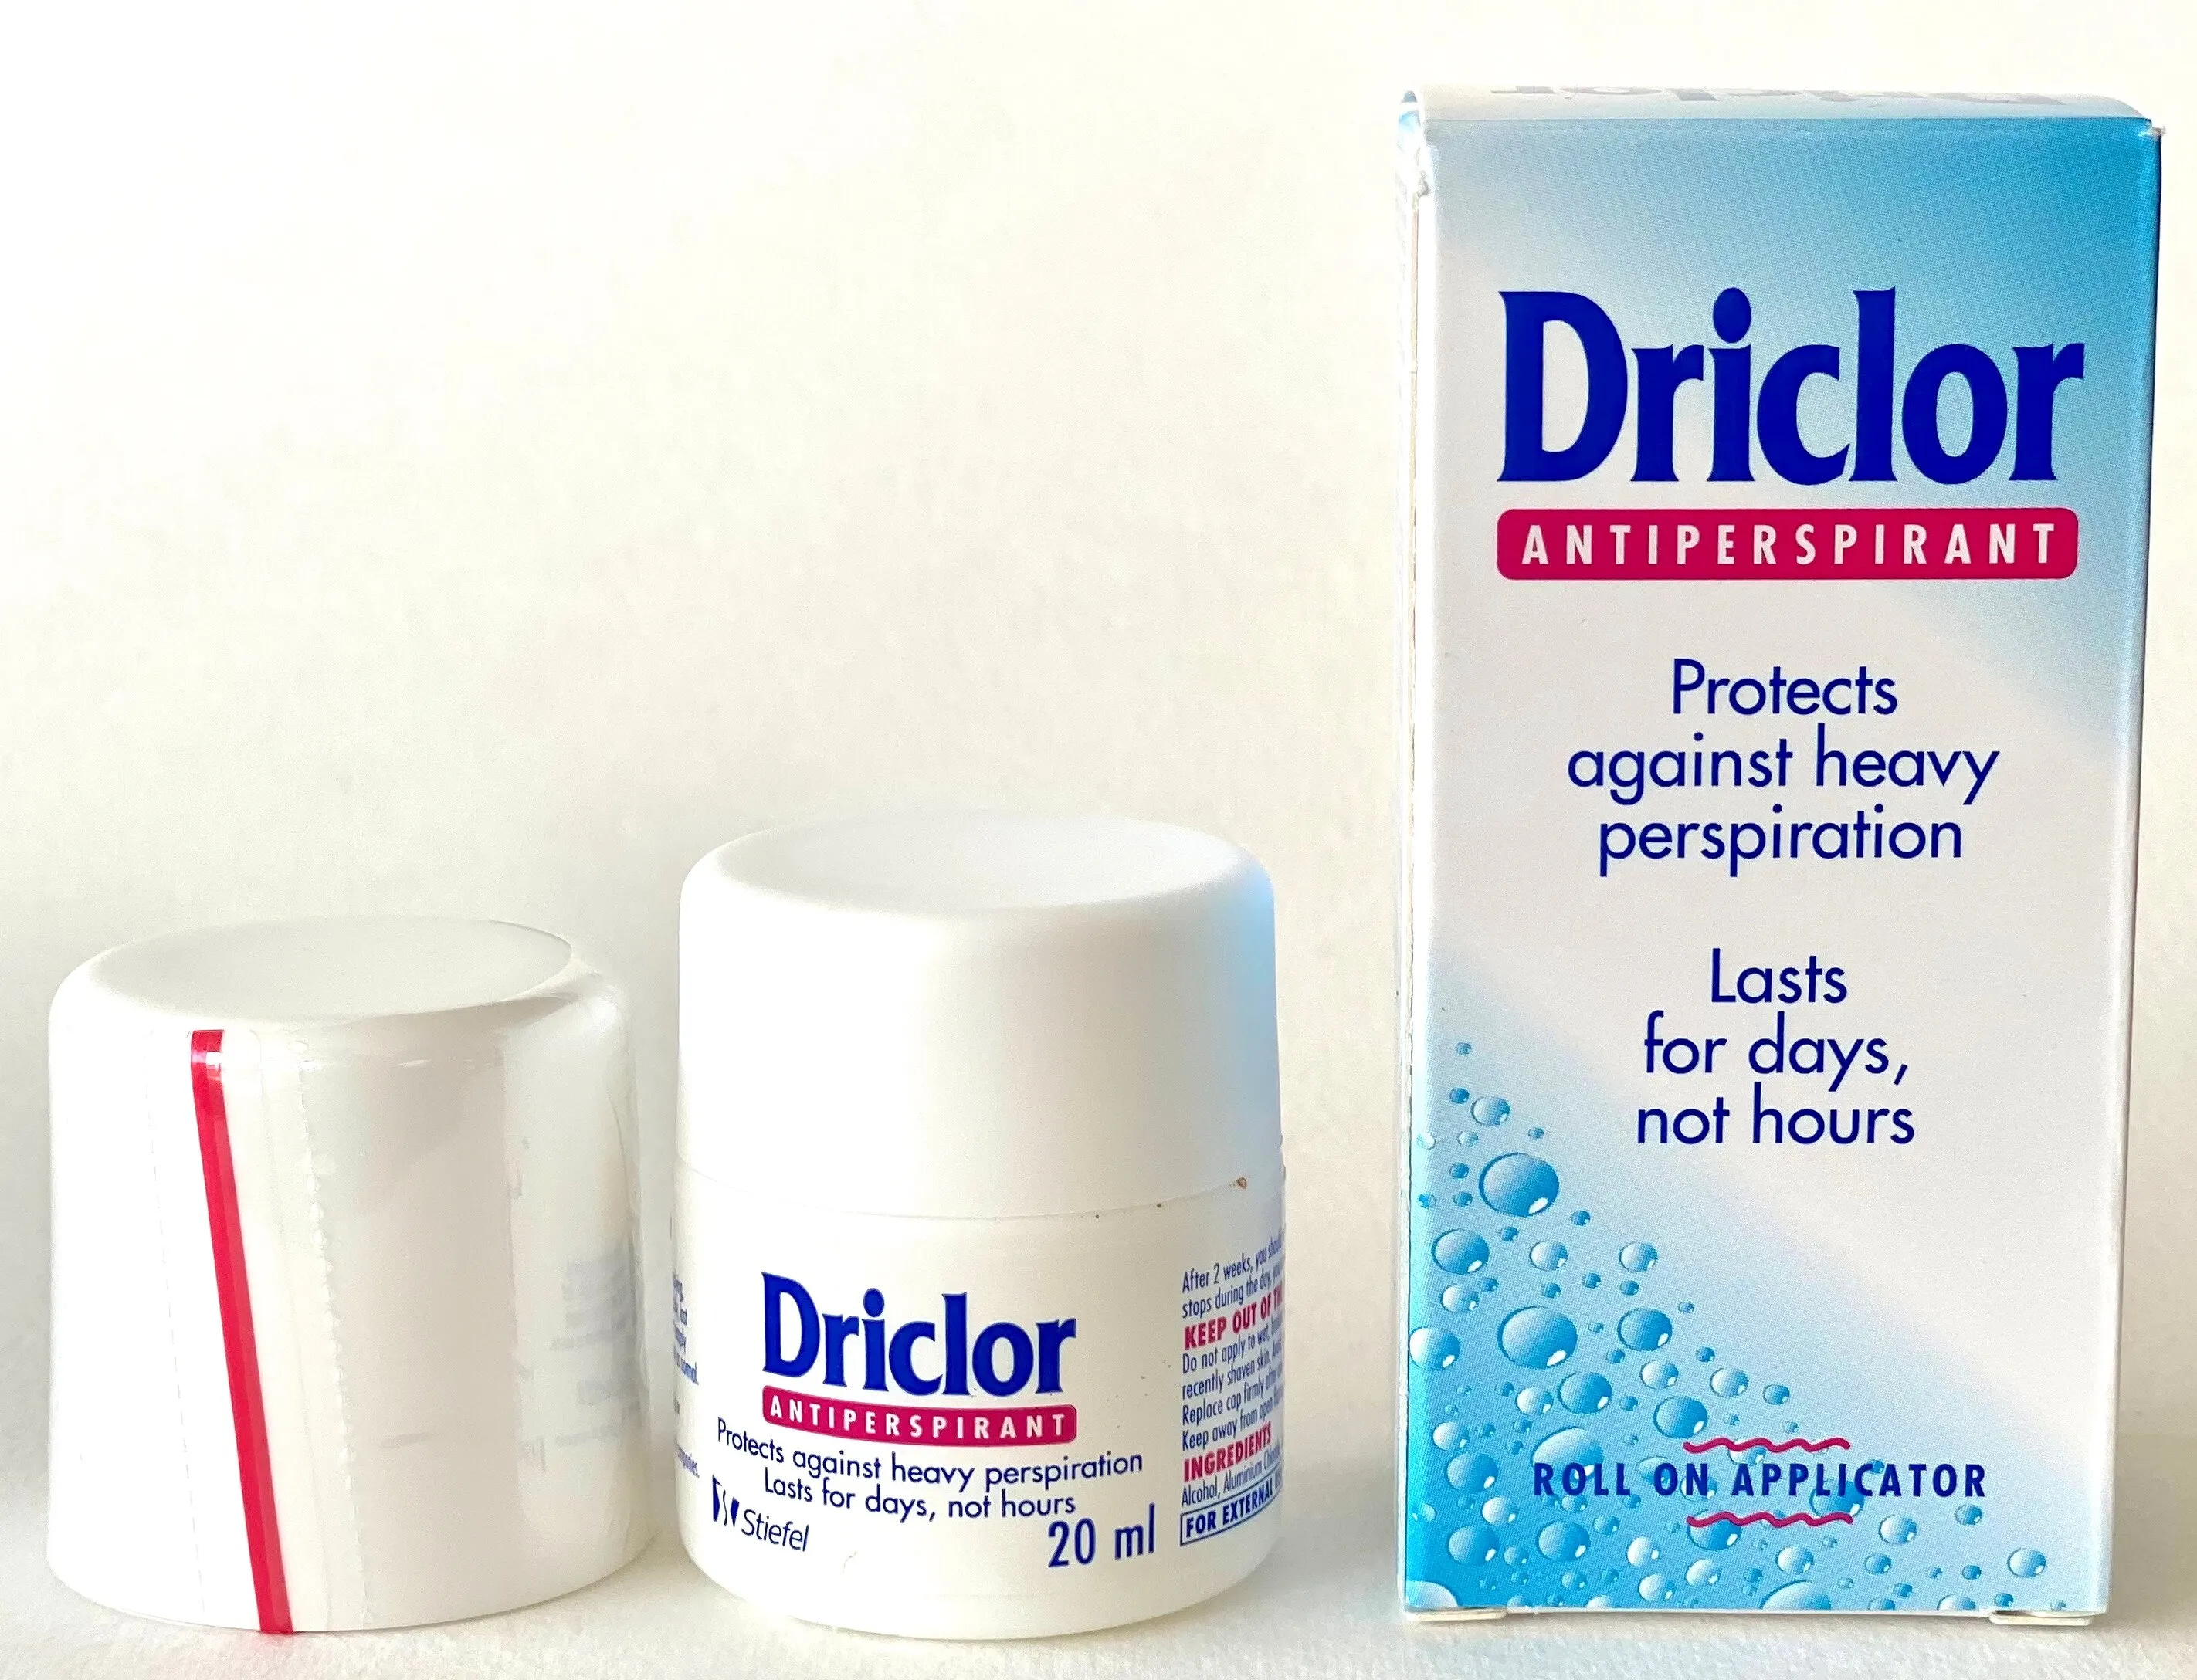 

Driclor Antiperspirant Roll-on 20 Ml Antiperspirant Deodorant | Clinical Strength Hyperhidrosis Treatment - Reduces Armpit Sweat